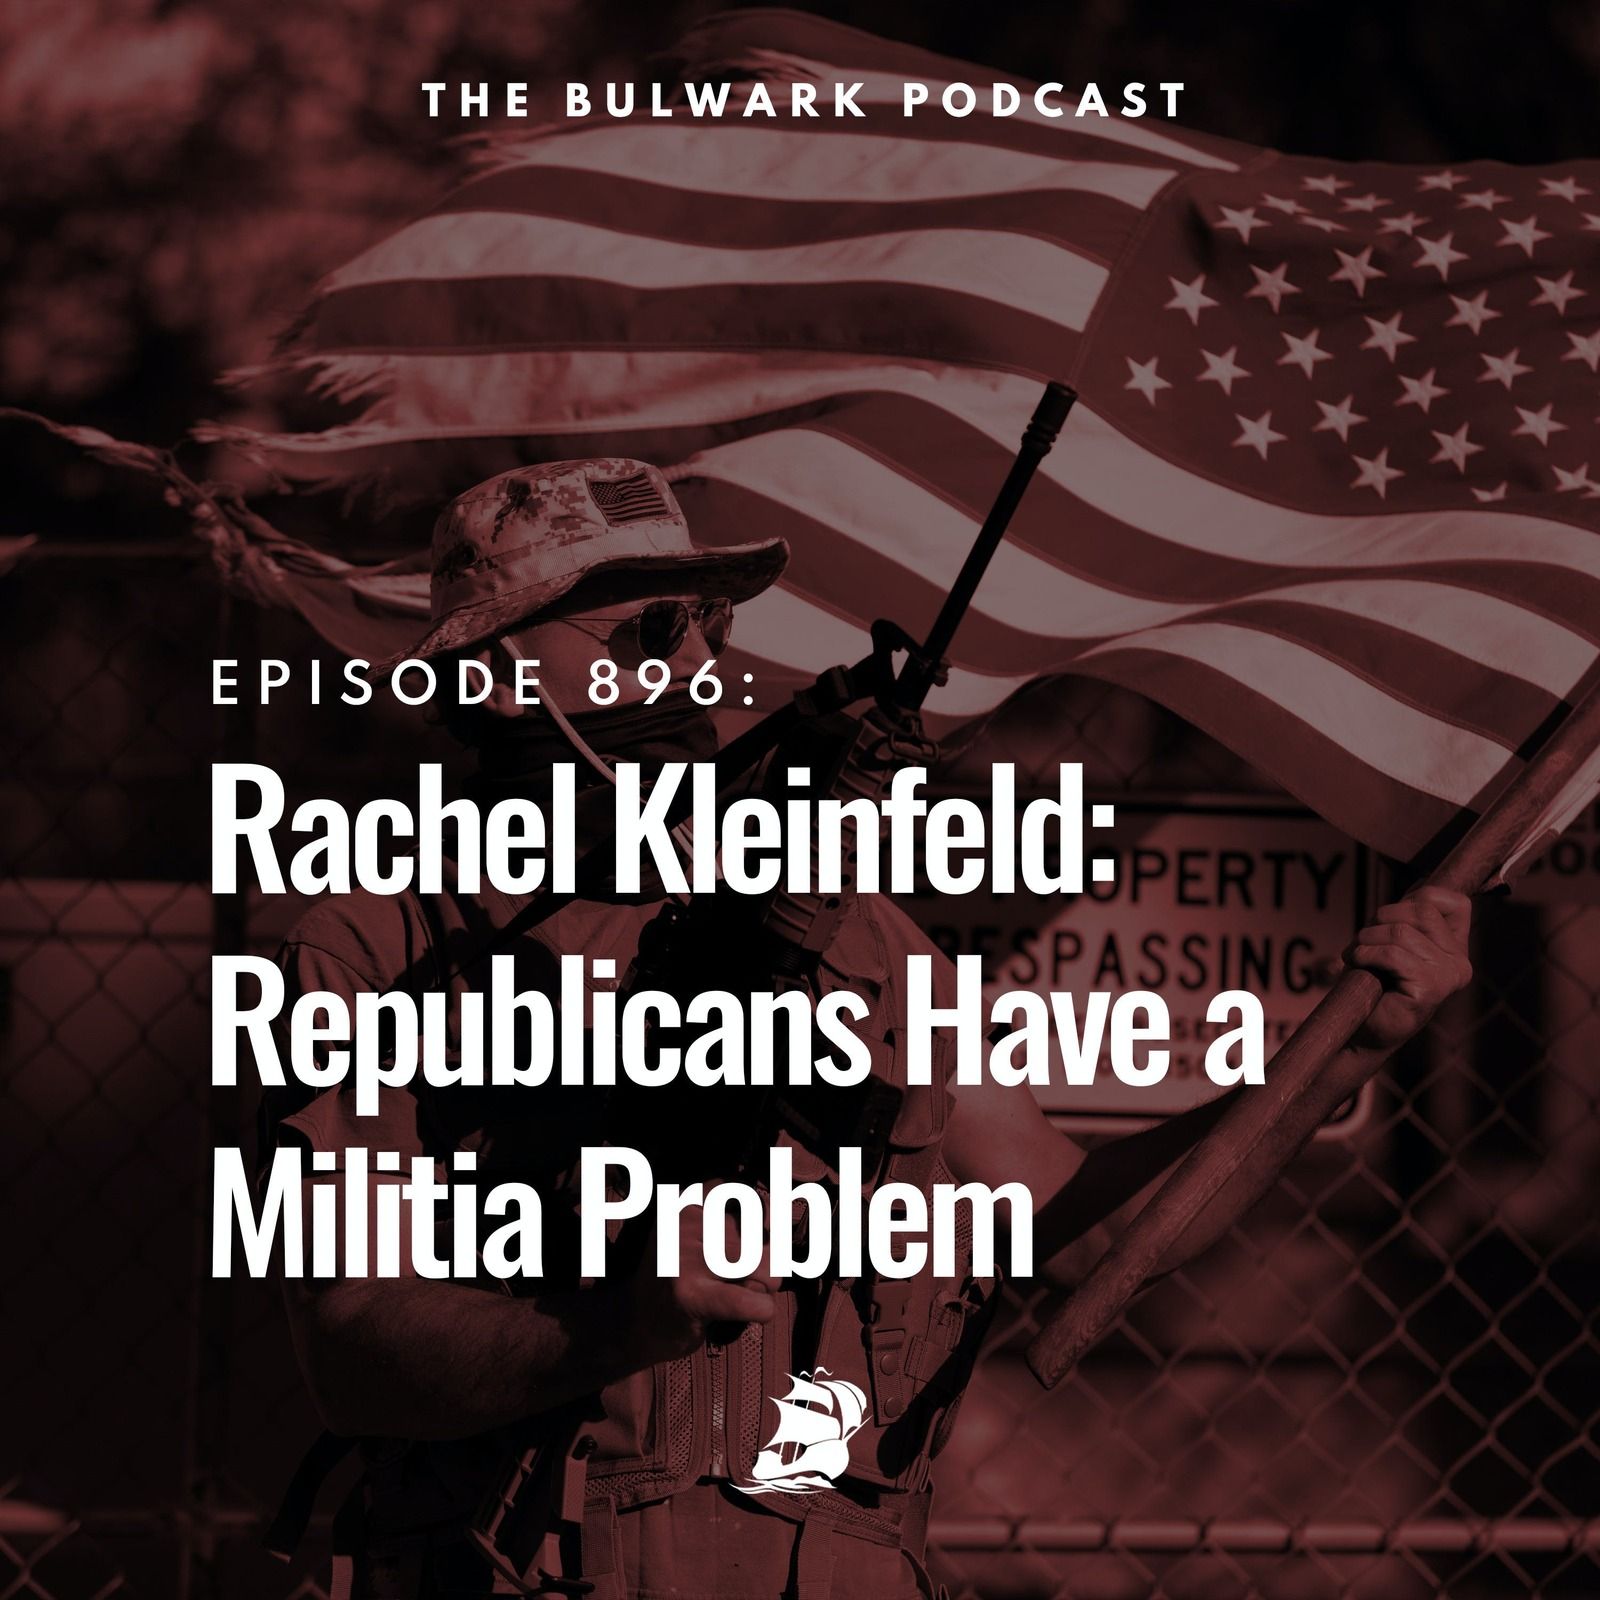 Rachel Kleinfeld: Republicans Have a Militia Problem by The Bulwark Podcast